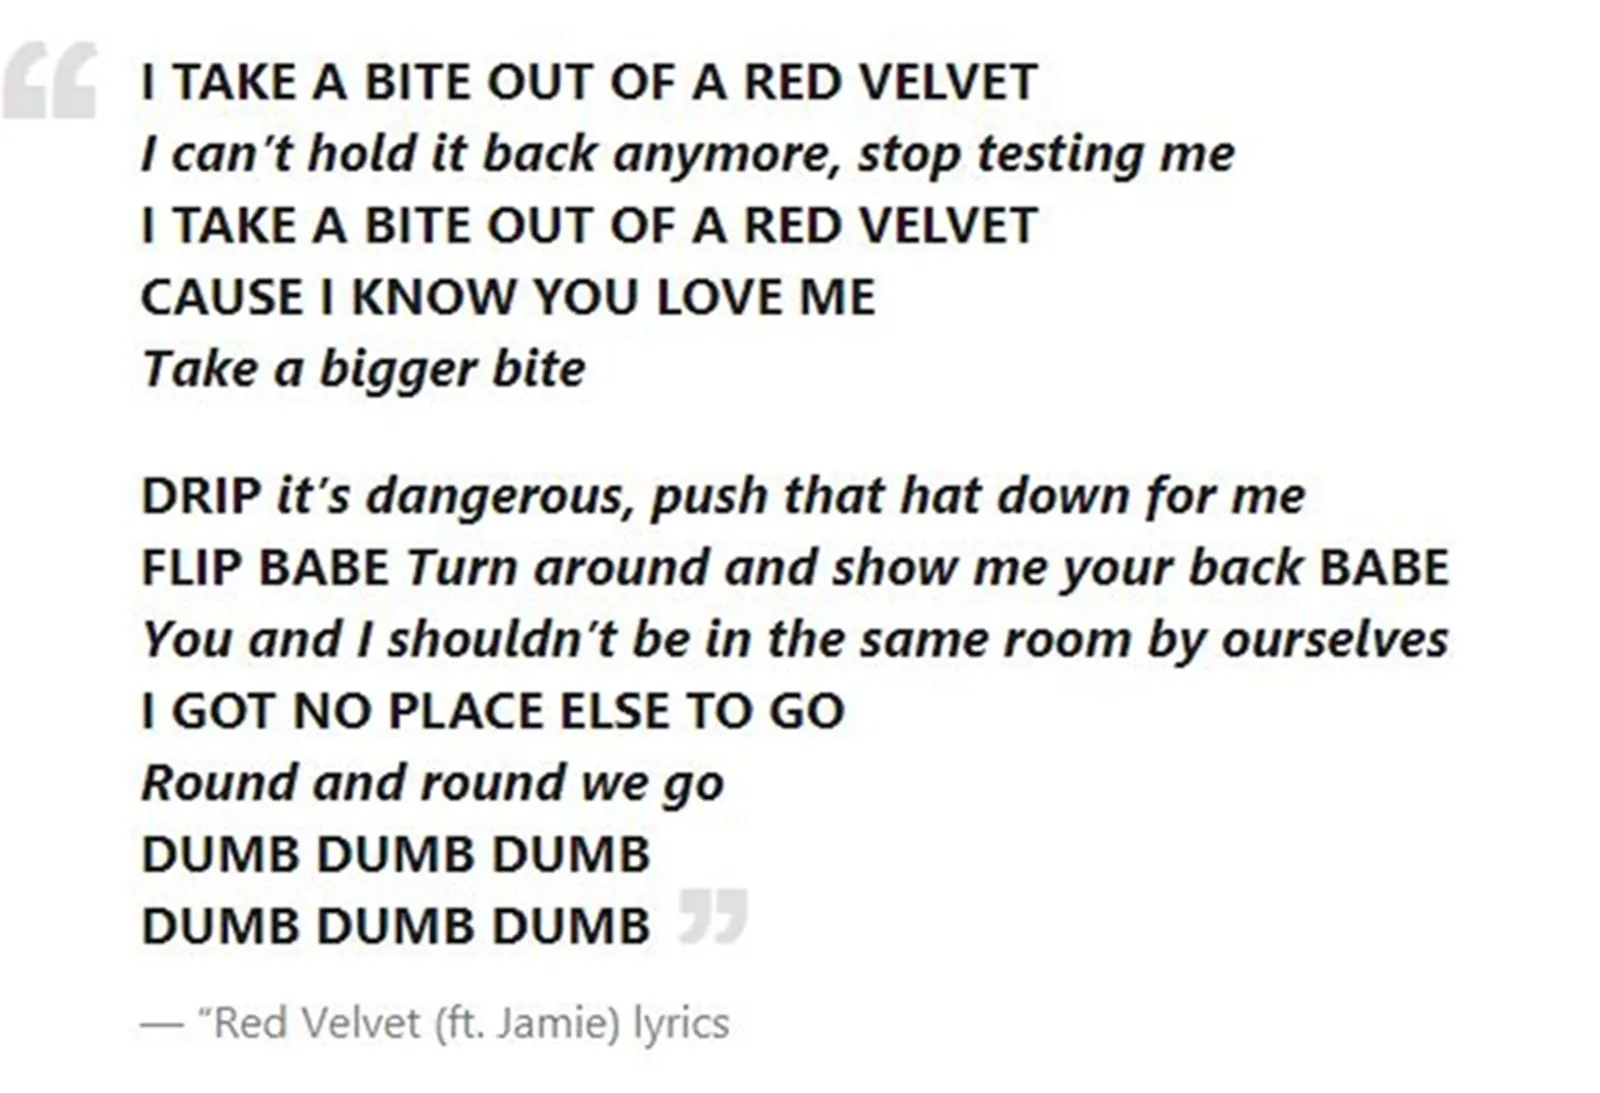 Lirik Lagu 'Red Velvet' Ravi Tuai Kritik, Ini 5 Alasannya!